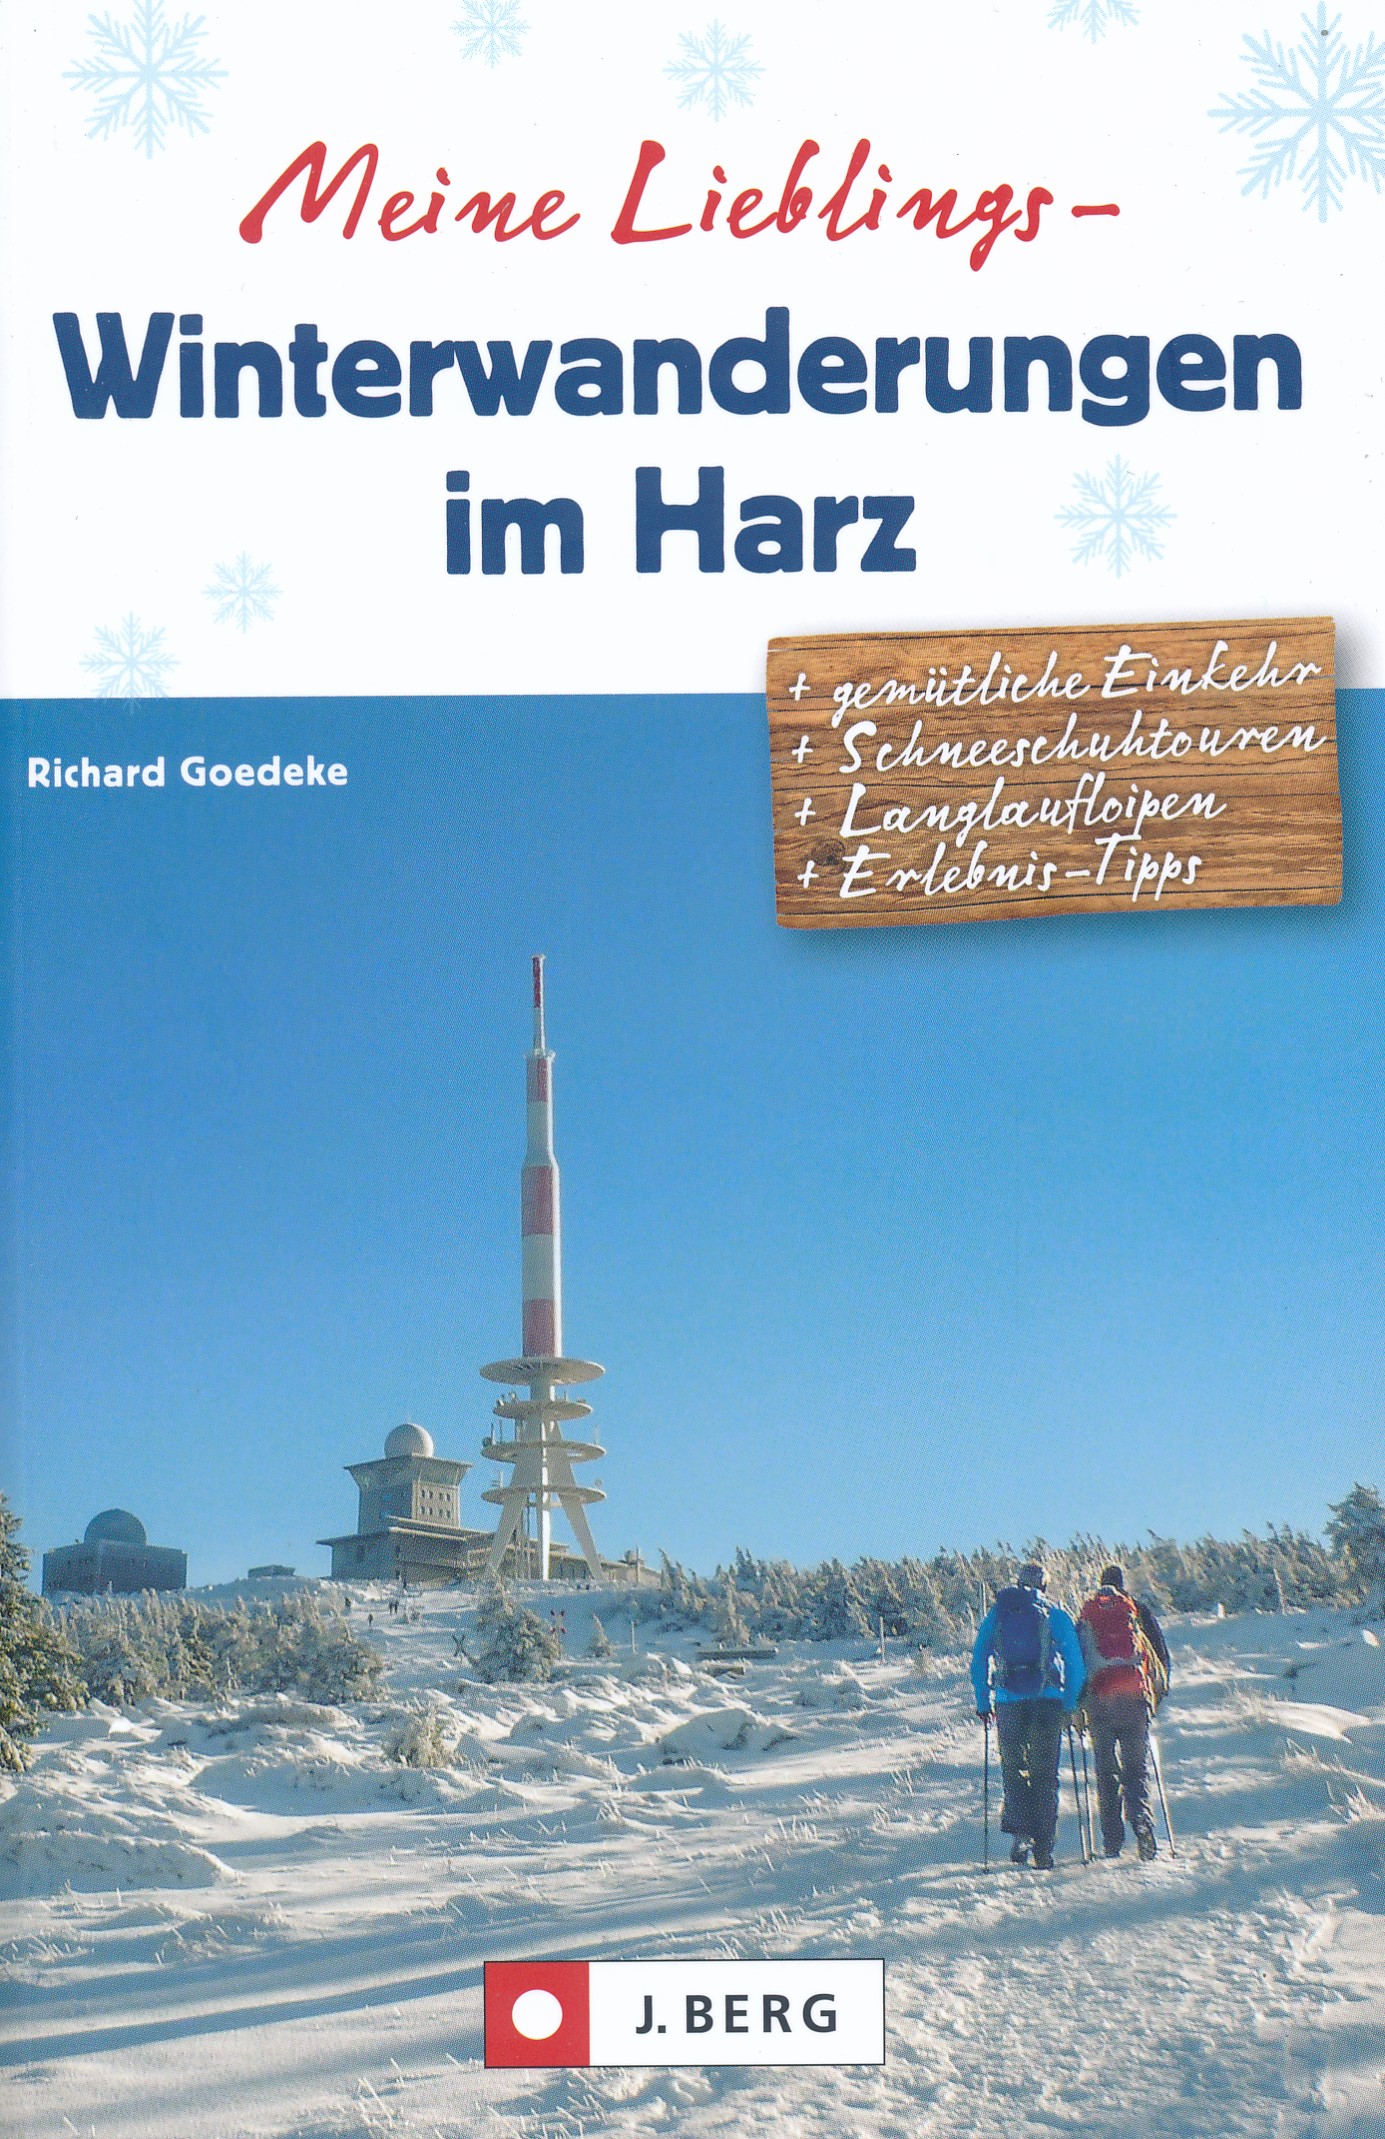 Online bestellen: Wandelgids Meine Lieblings-Winterwanderungen Harz | J. Berg